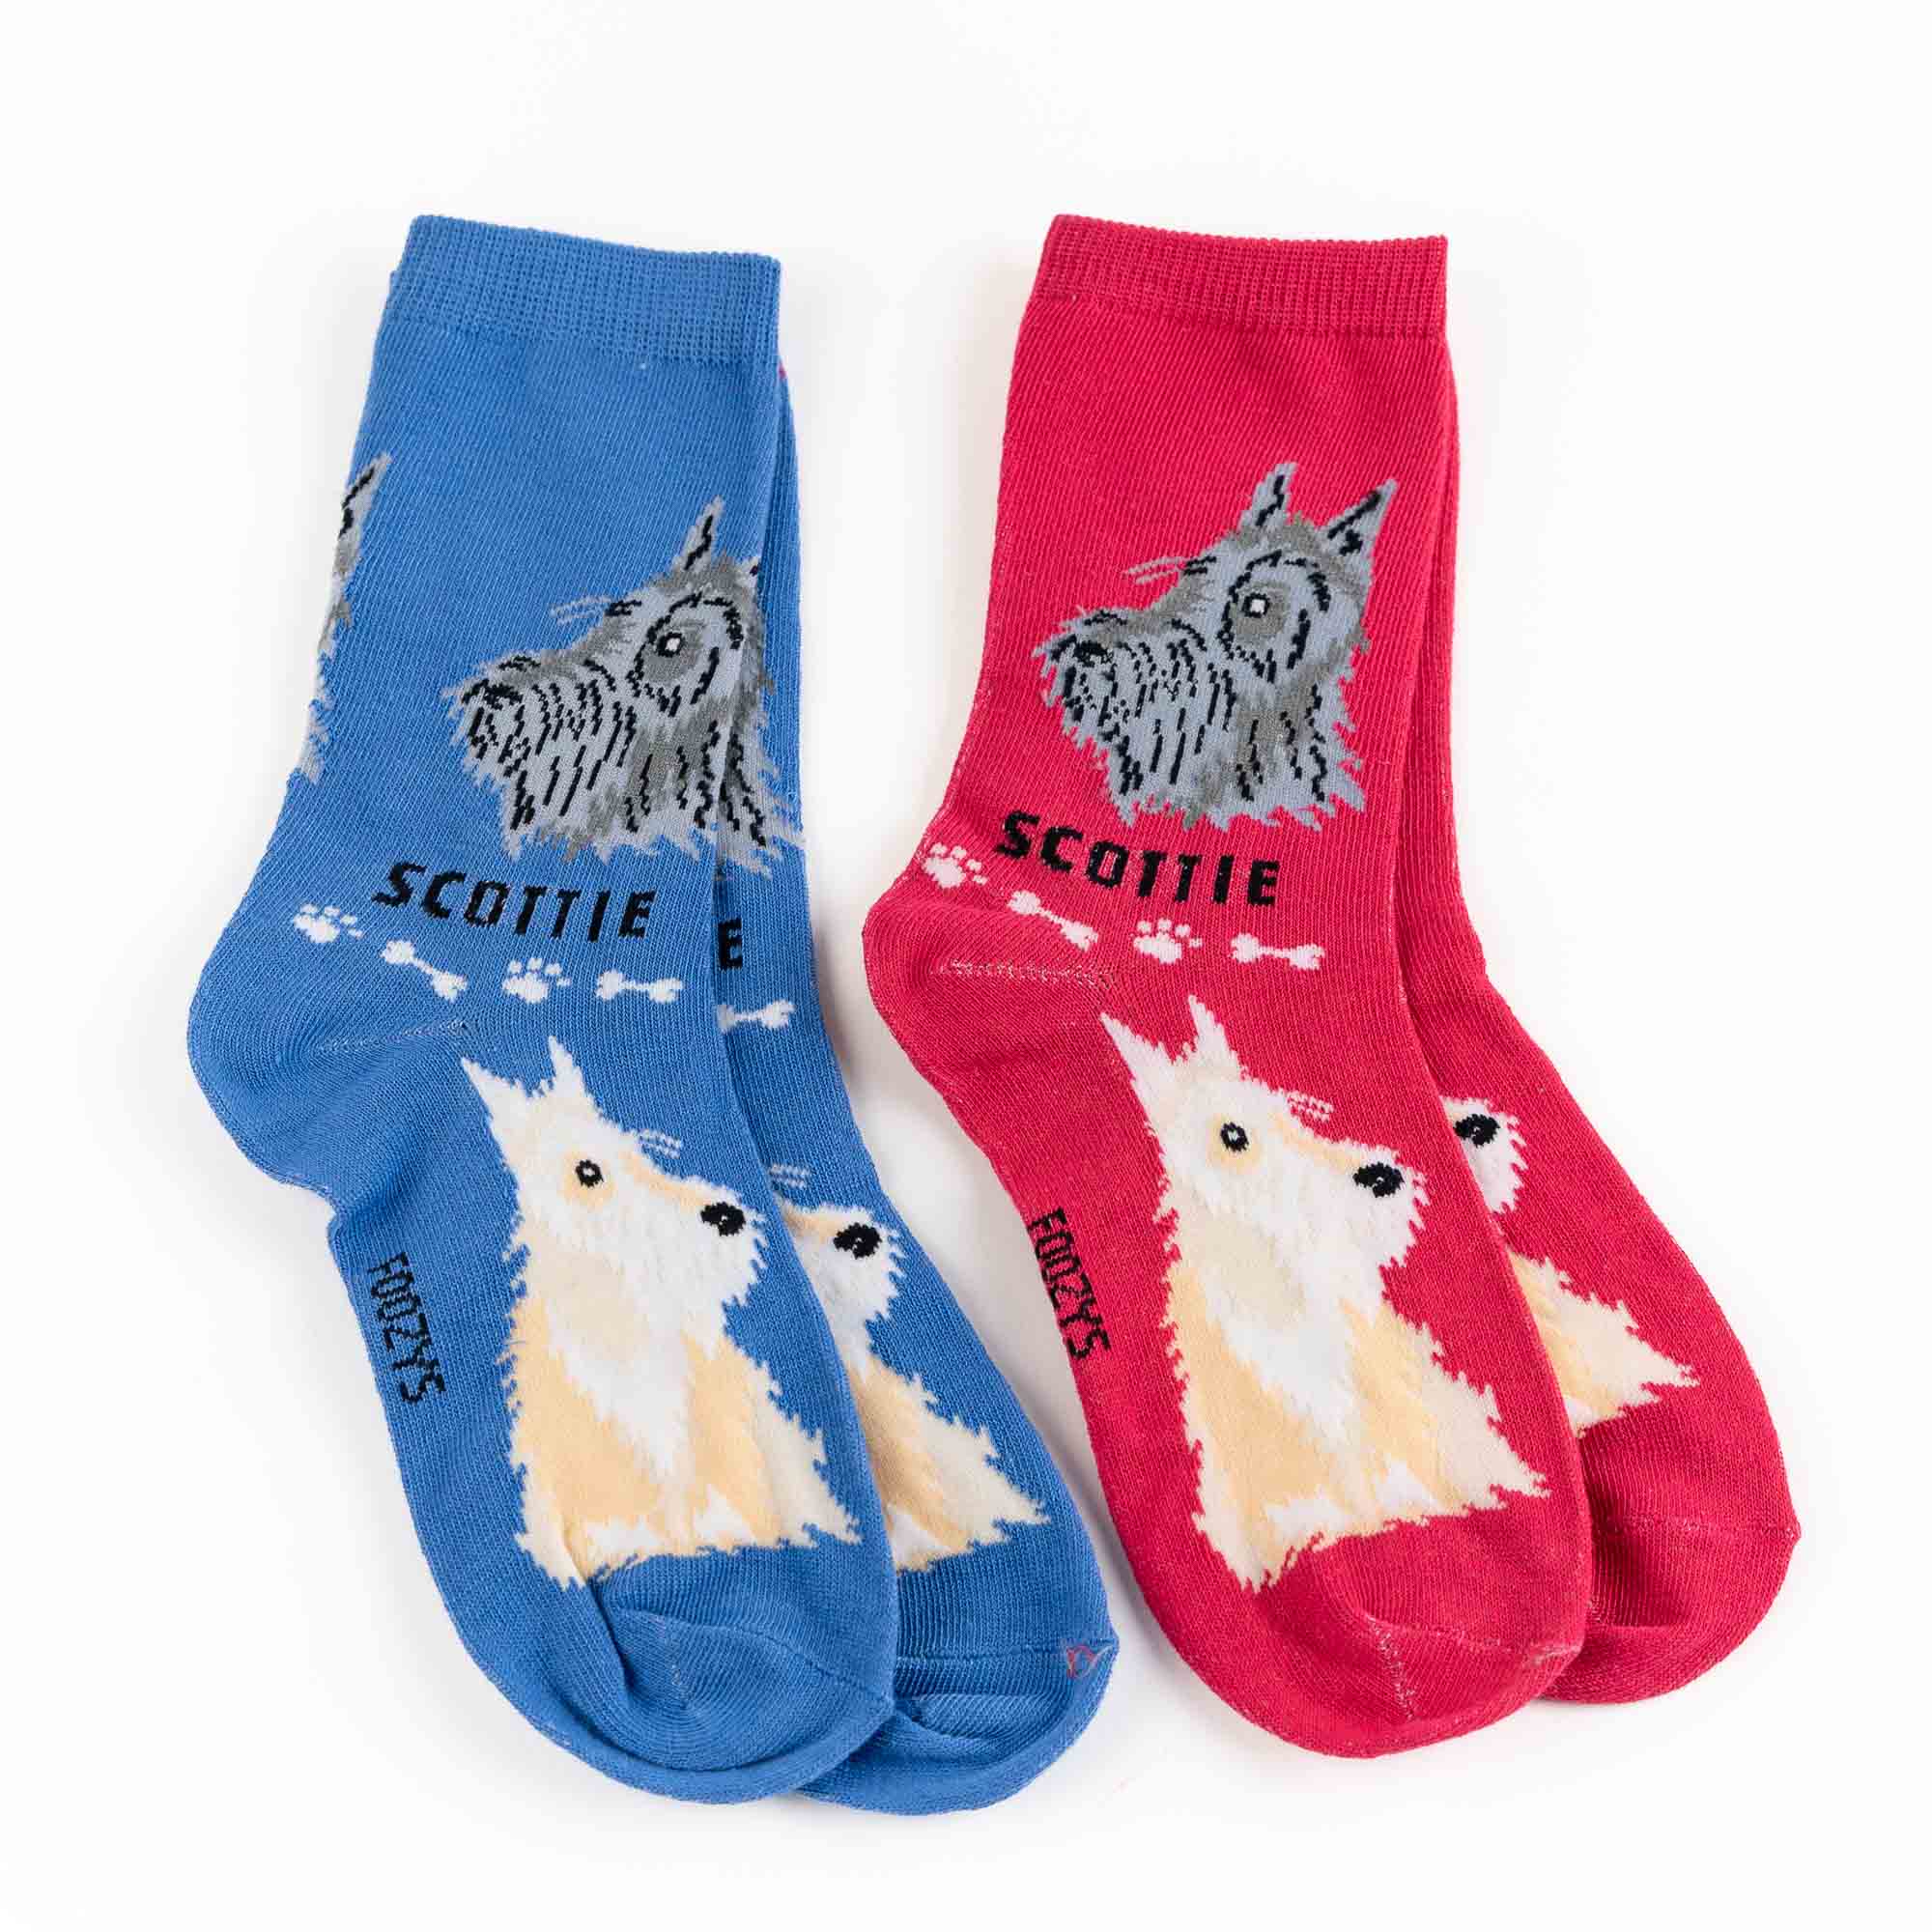 My Favorite Dog Breed Socks ❤️ Scottie Breed Dog Sock - 2 Set Collection